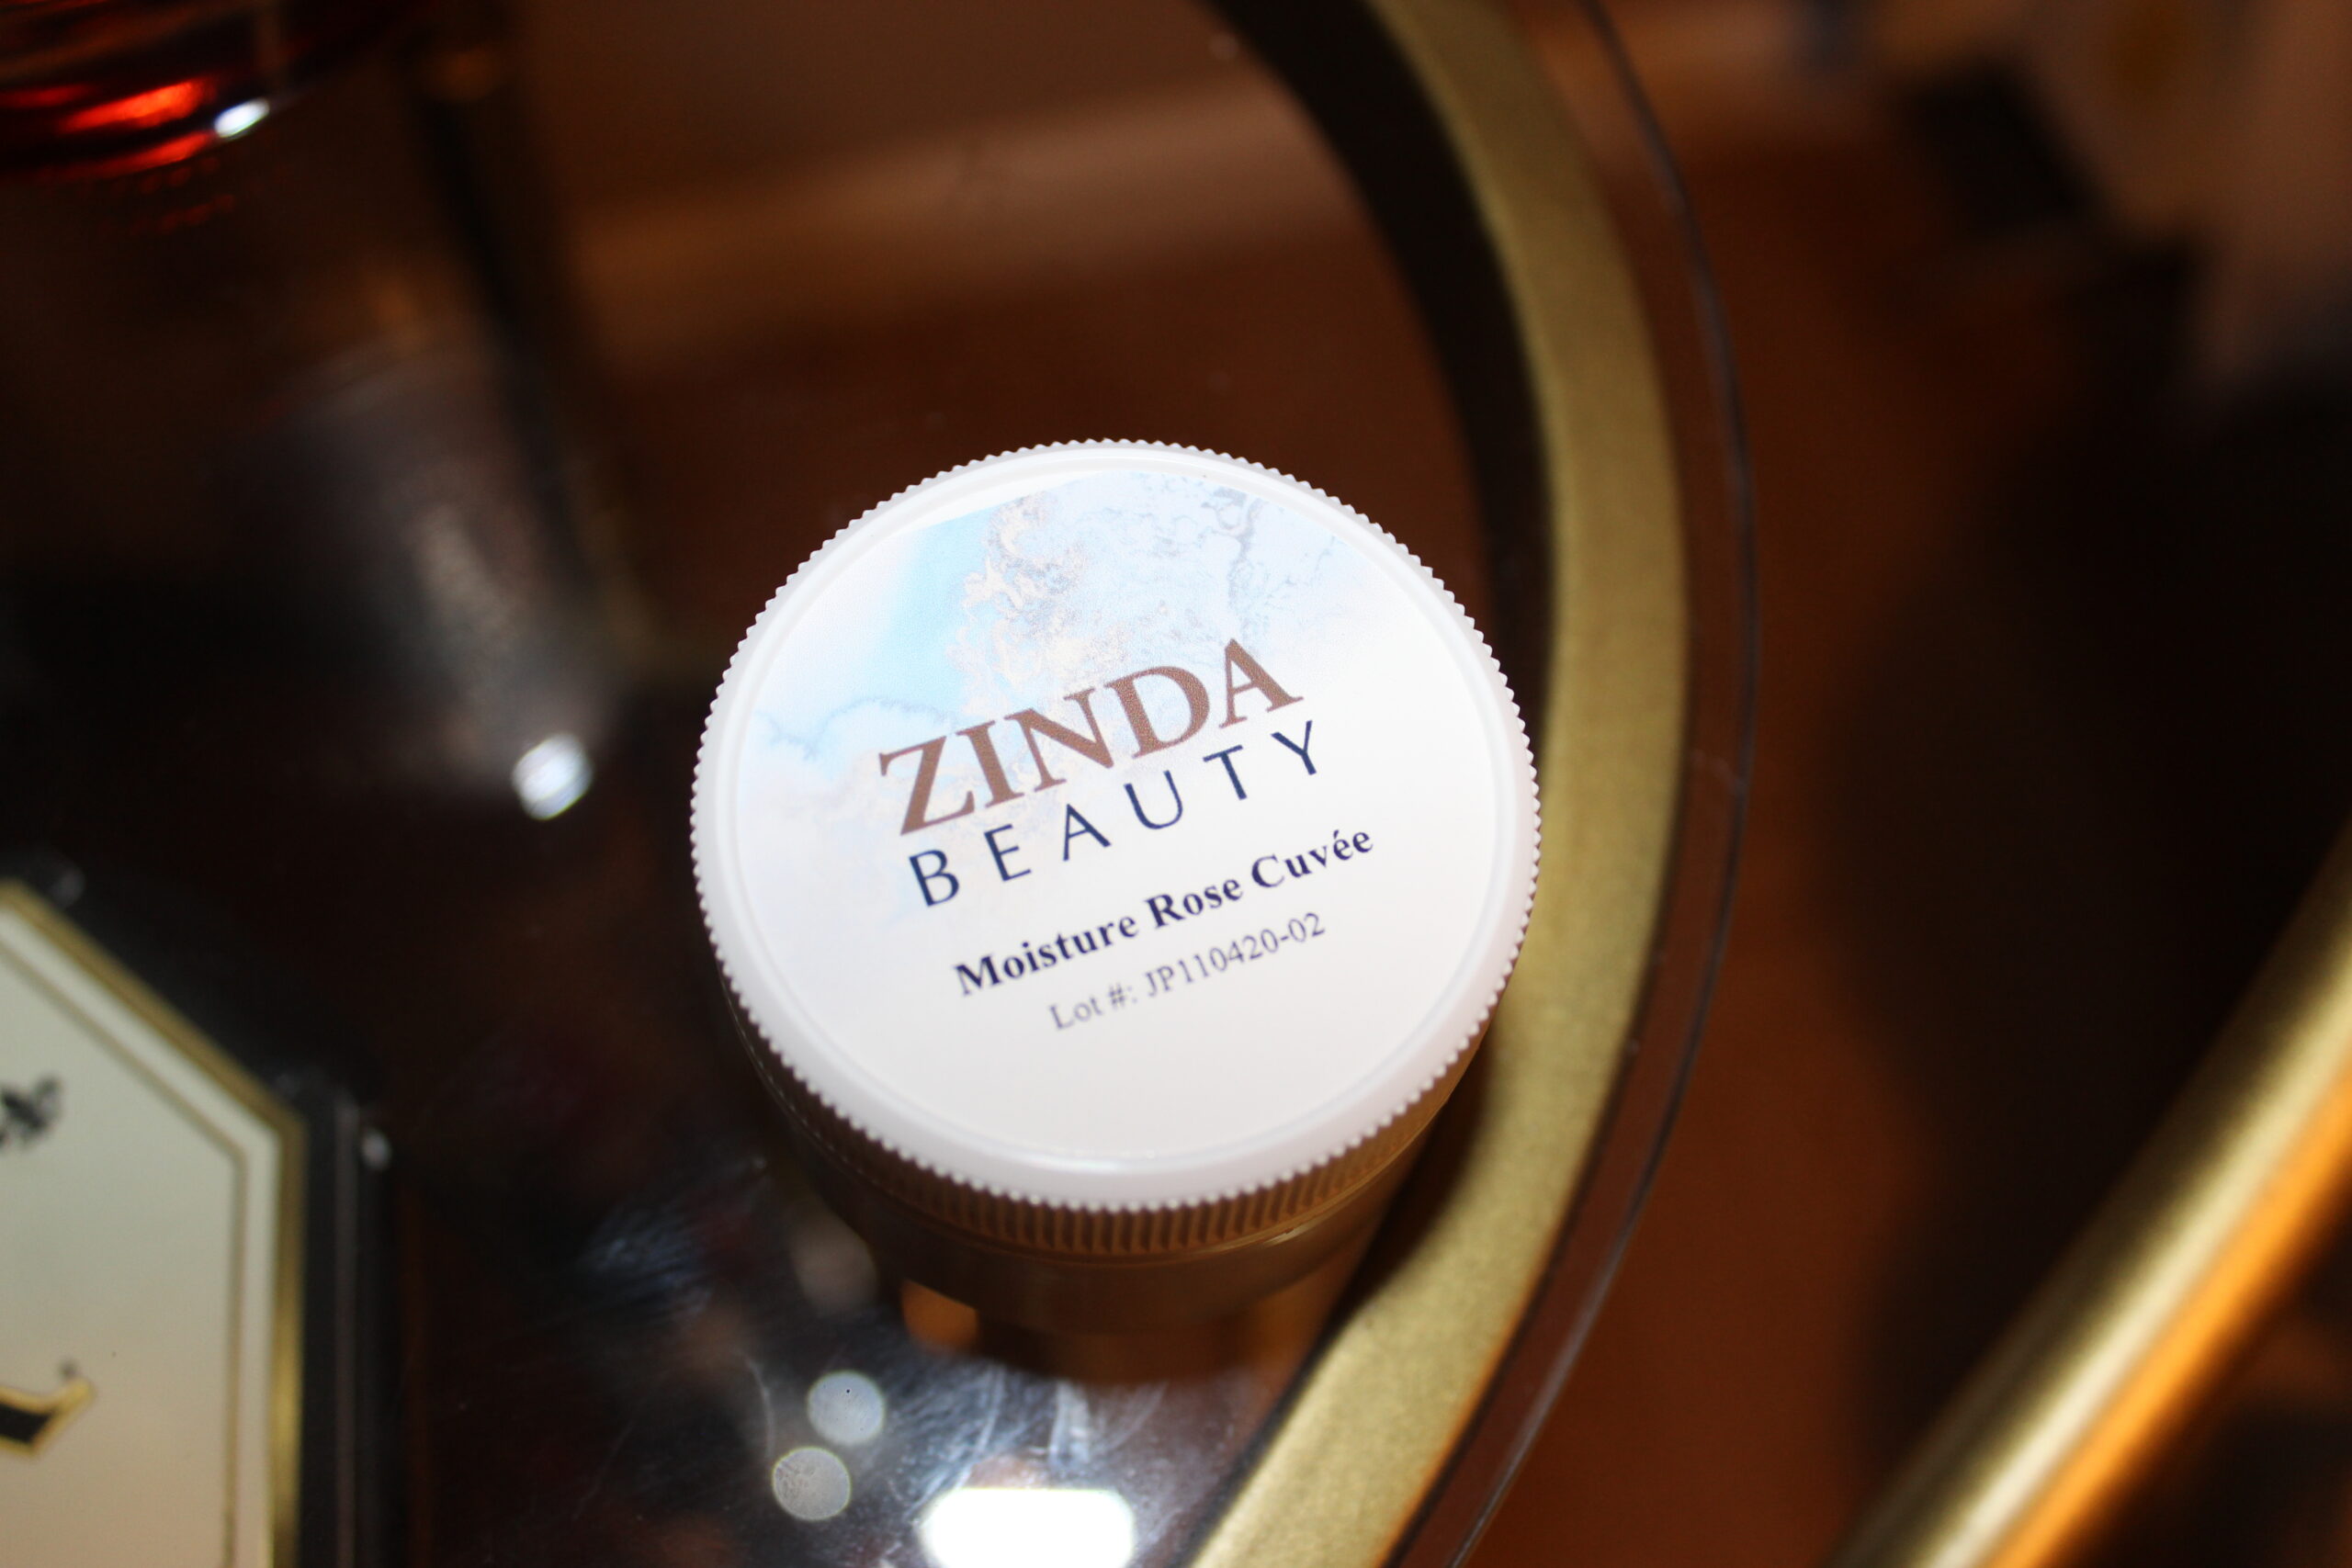 Zinda Beauty created from Wine Inspiration